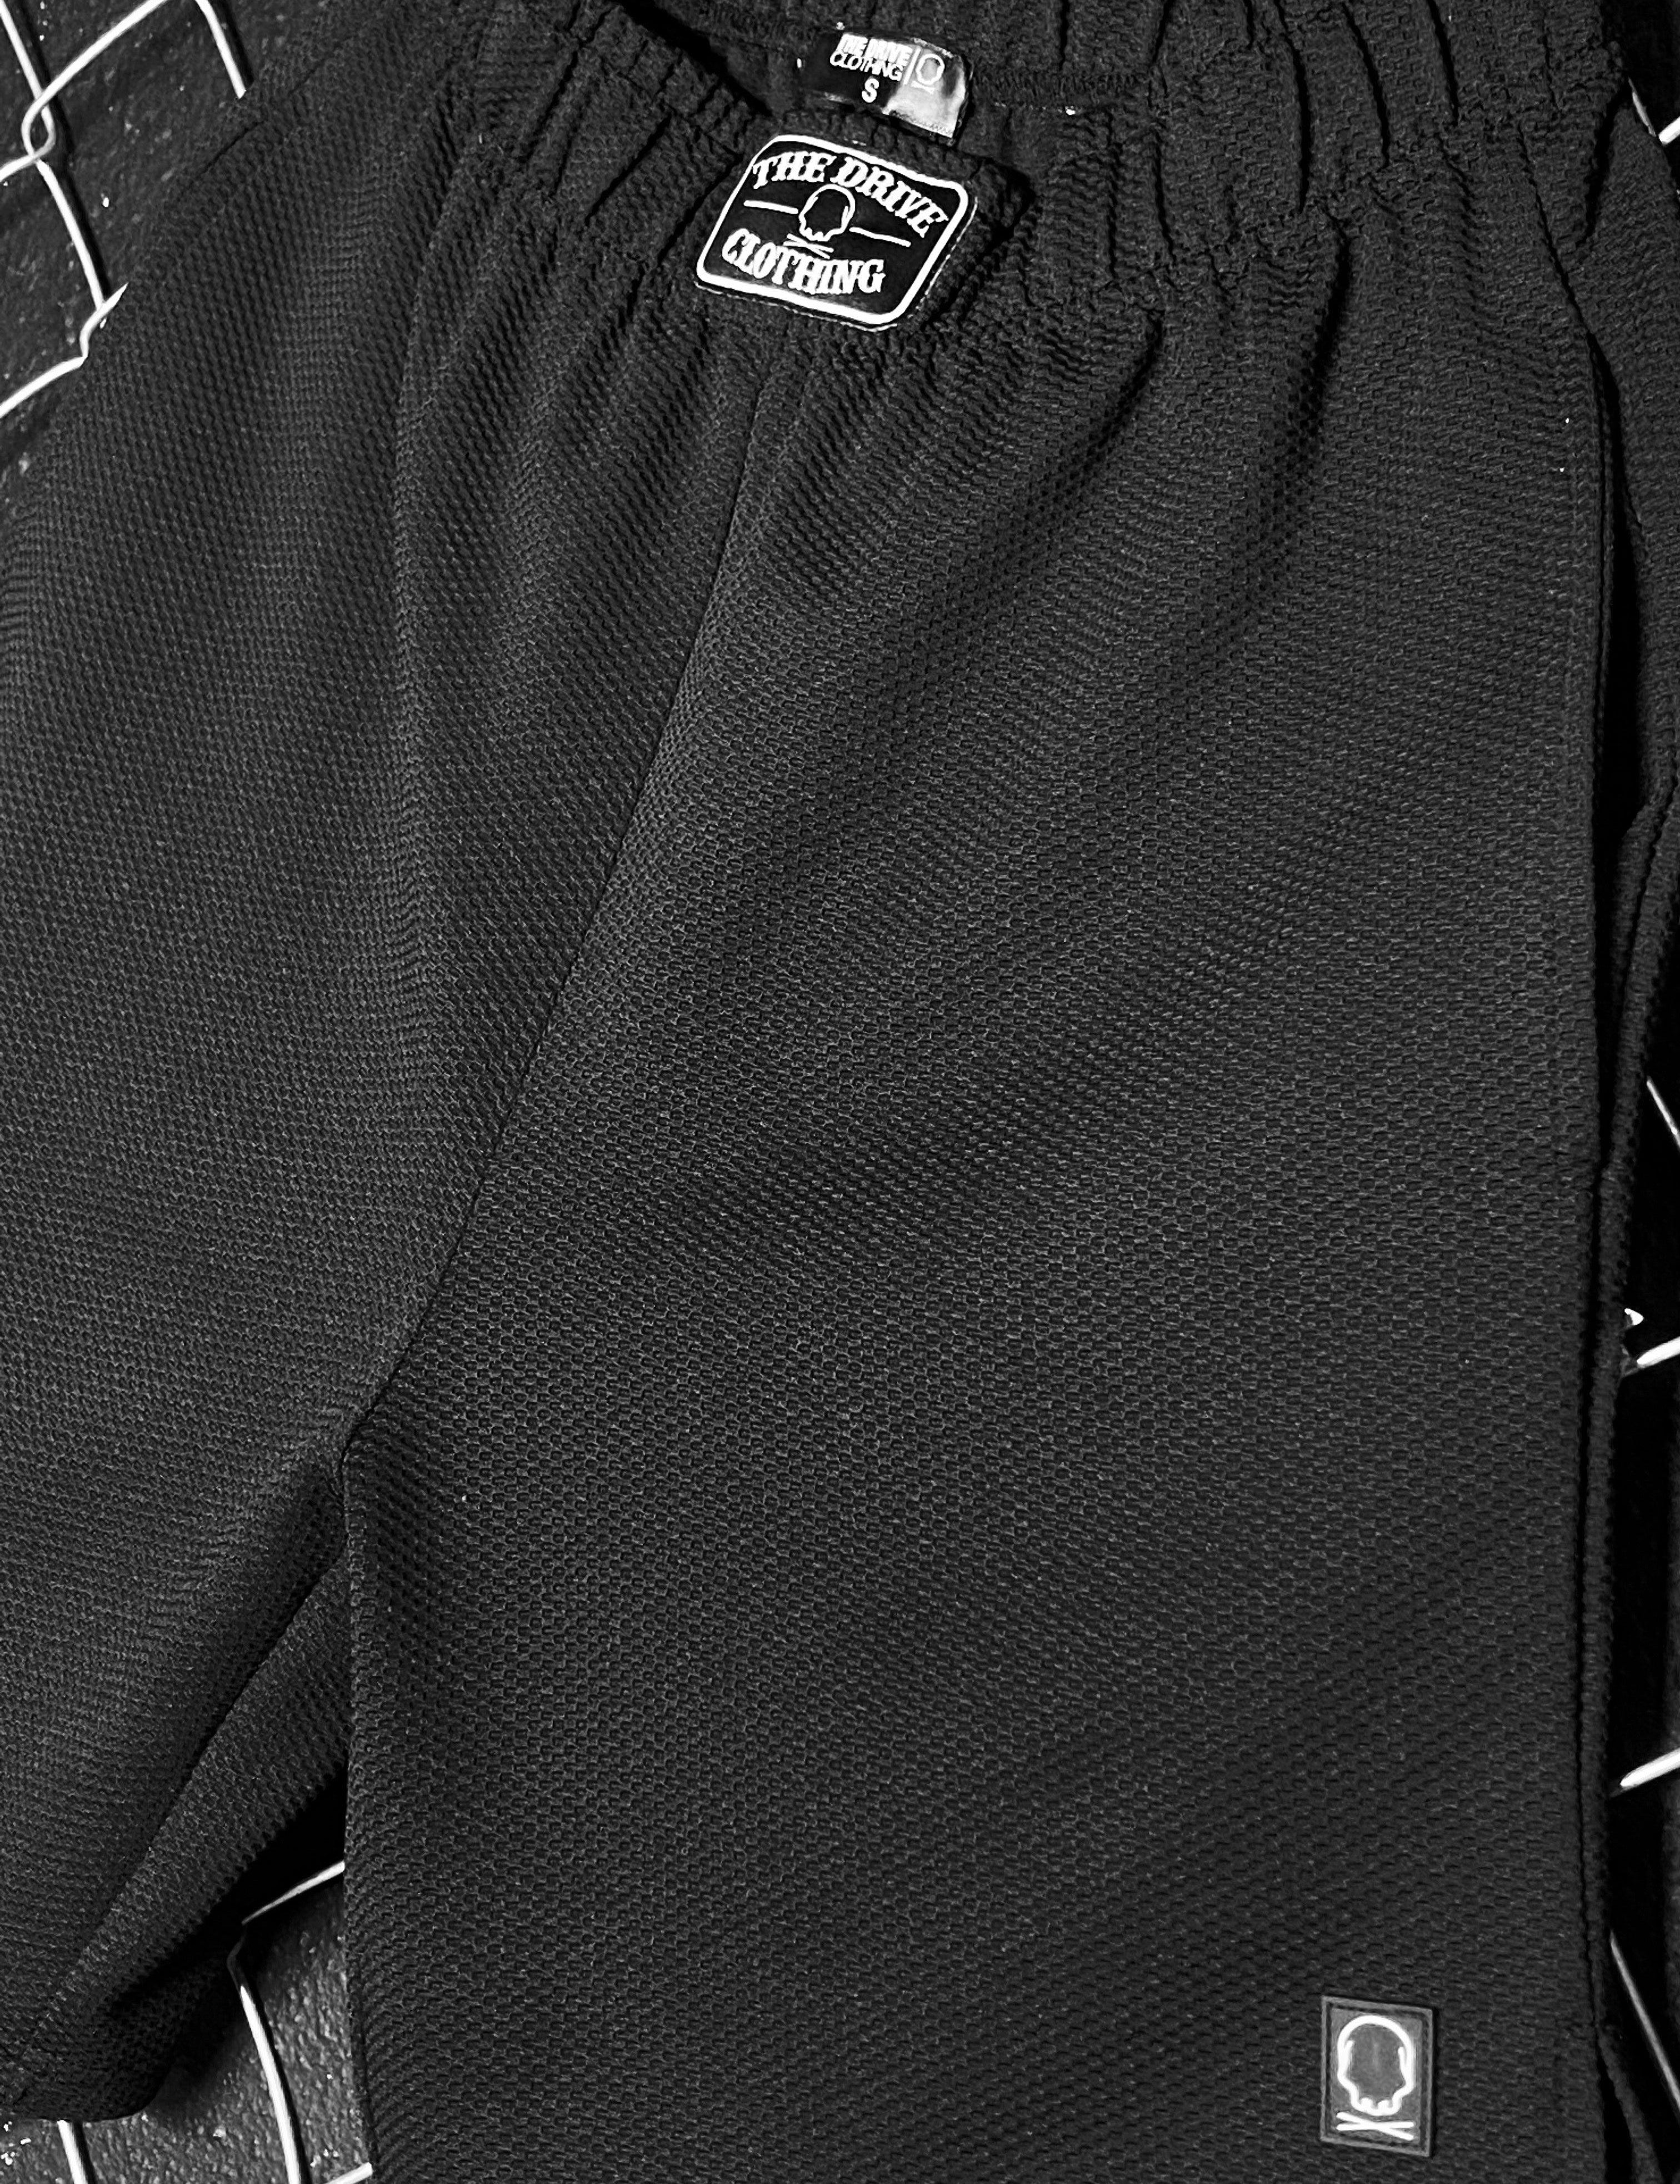 TDC BLACK BASKETBALL SHORTS - The Drive Clothing